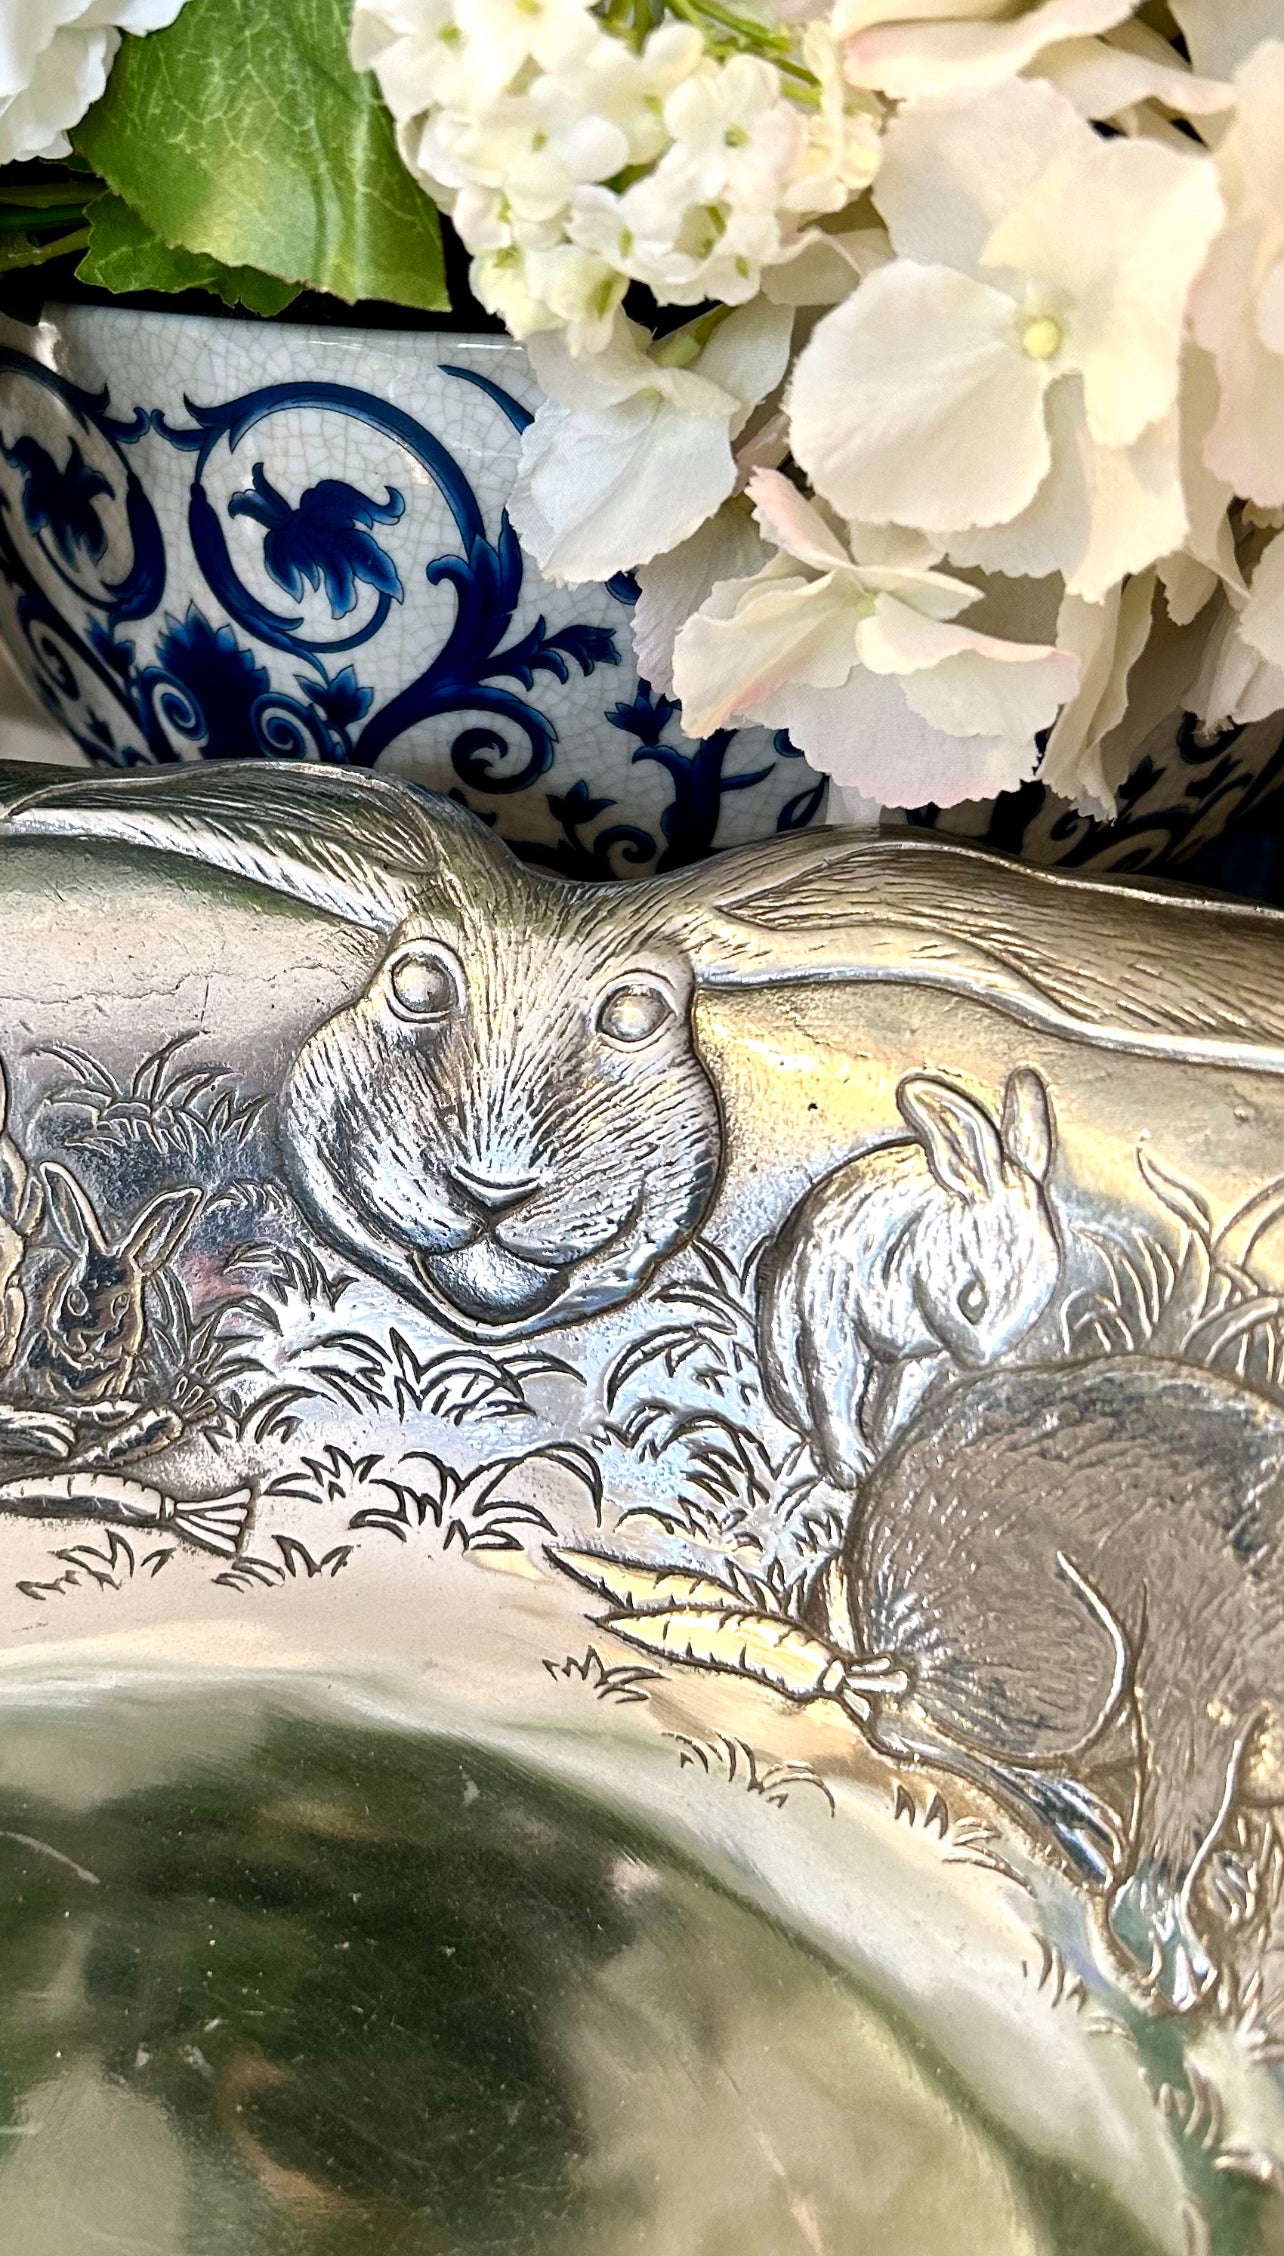 Rare massive bunnies rabbit Serving Bowl centerpiece by designer Arthur Court